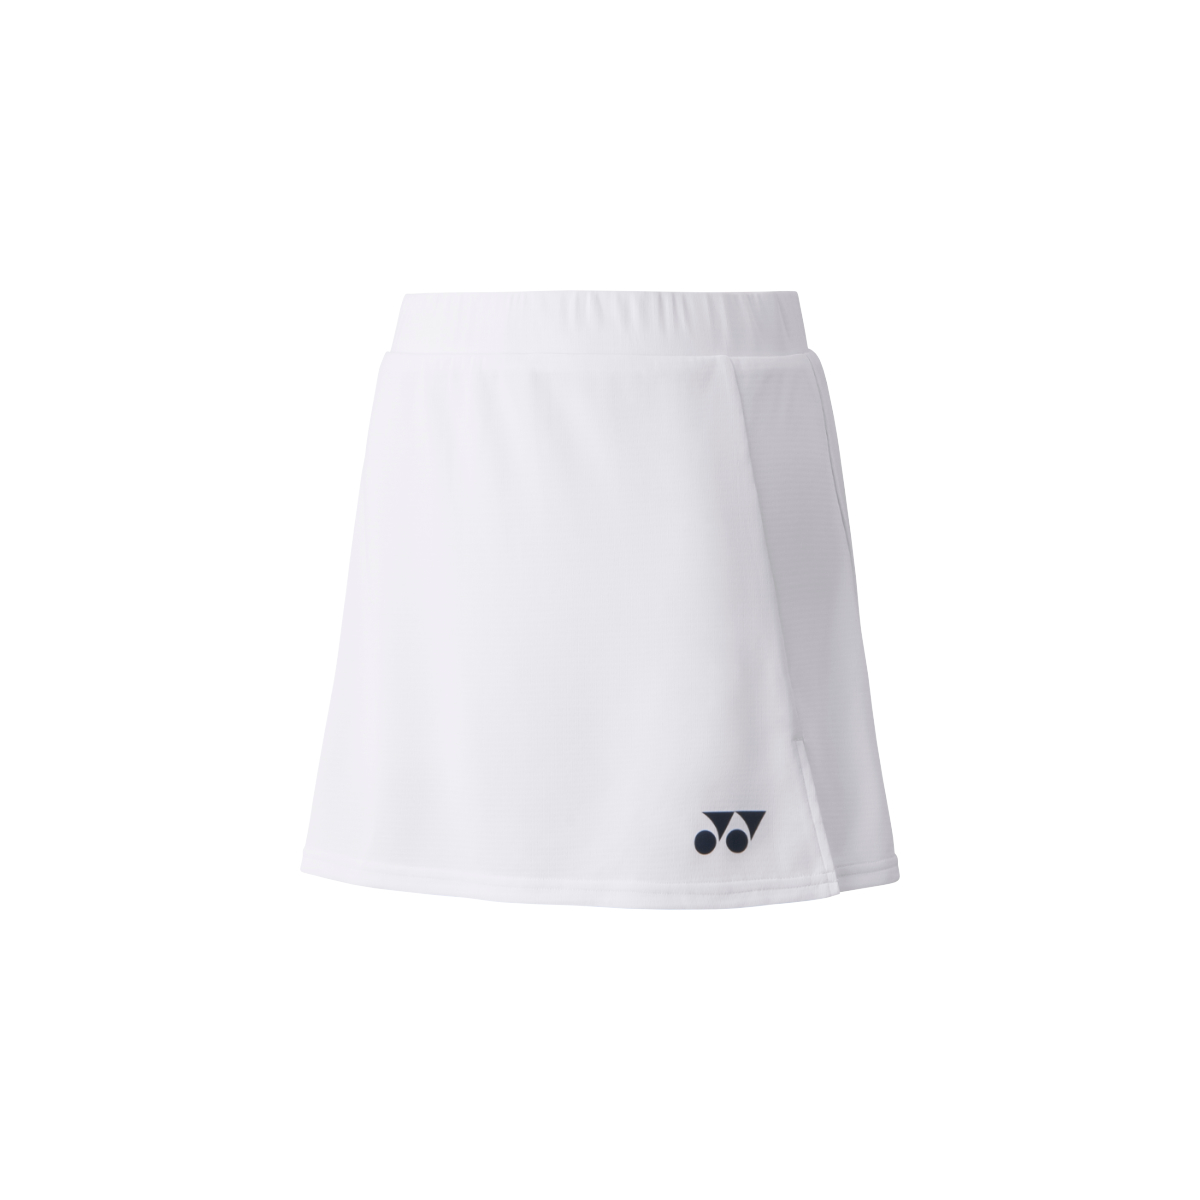 LADIES SKORT 26088 White (with inner Shorts)